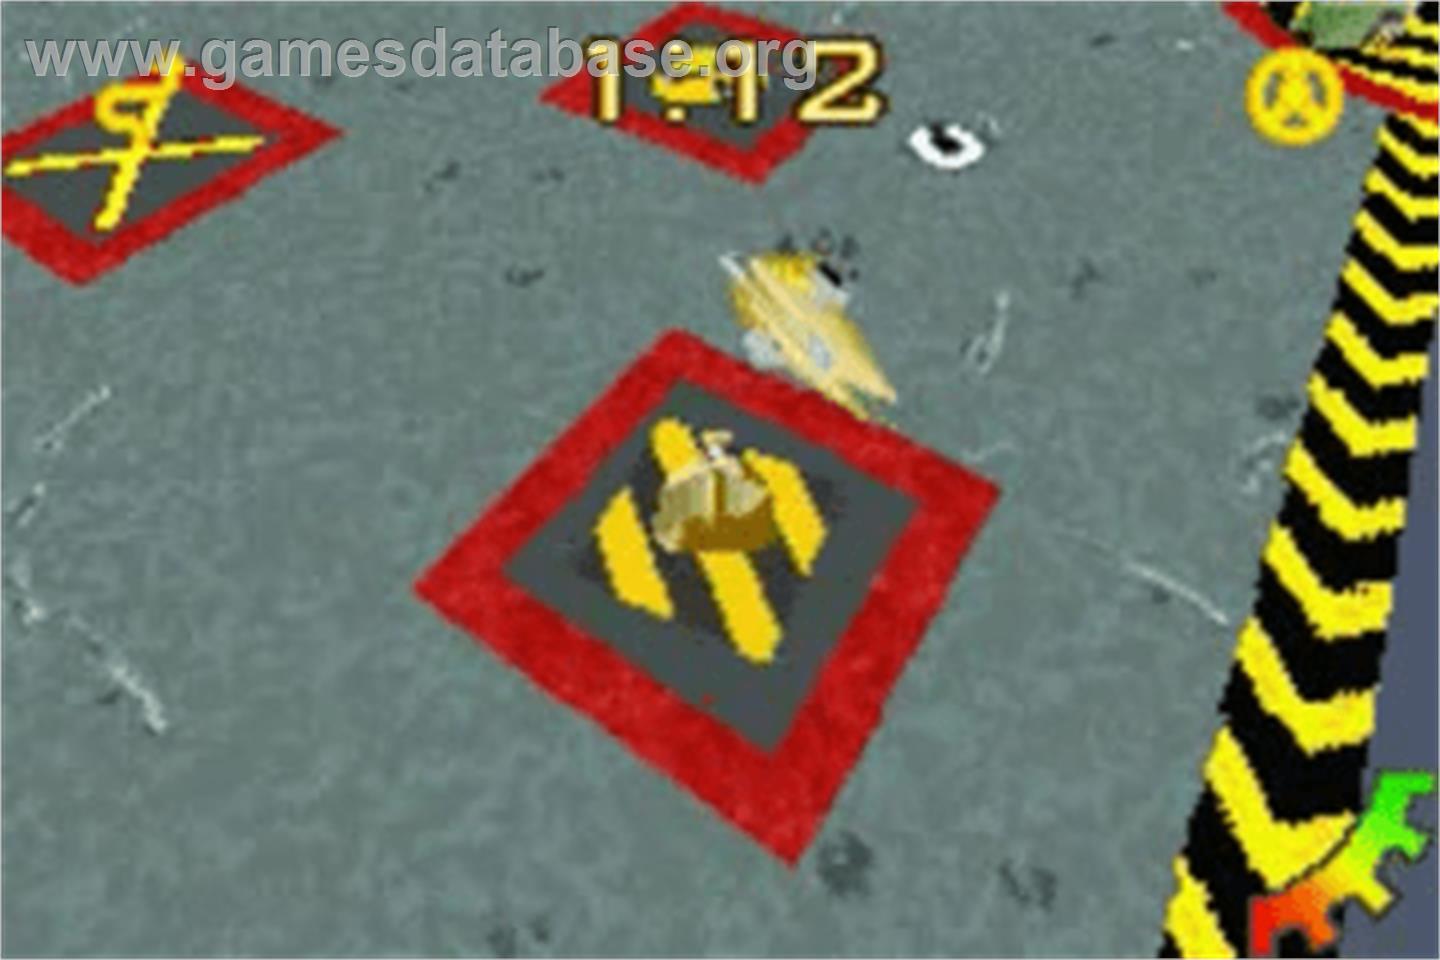 Robot Wars 2: Extreme Destruction - Nintendo Game Boy Advance - Artwork - In Game